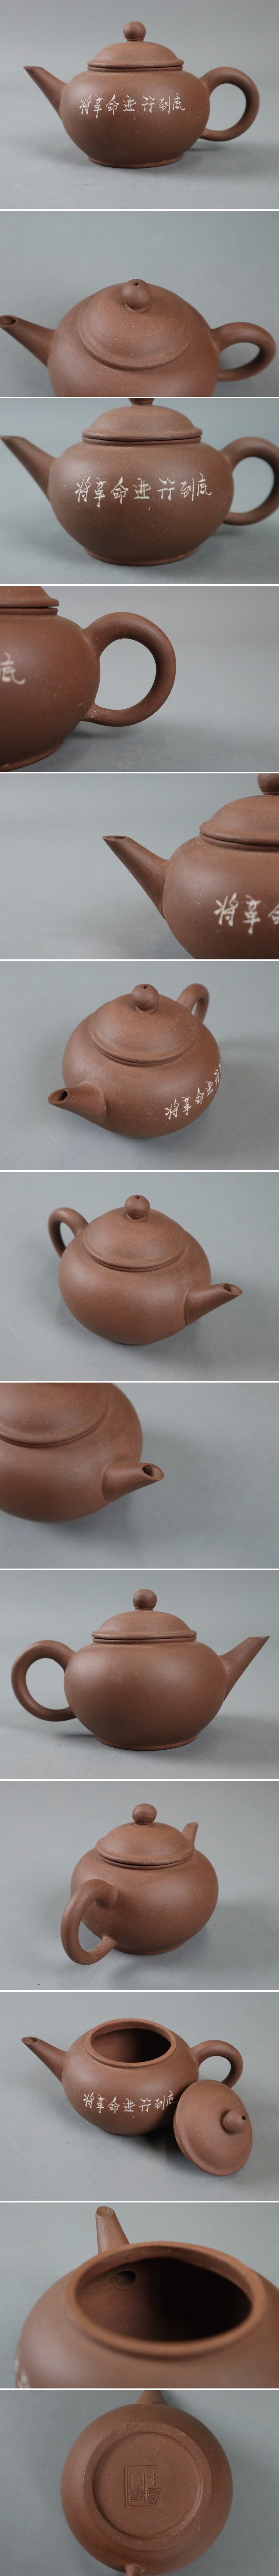 ベビーグッズも大集合 紫砂 中国宜興 煎茶道具 茶壷 朱泥 時代物 急須